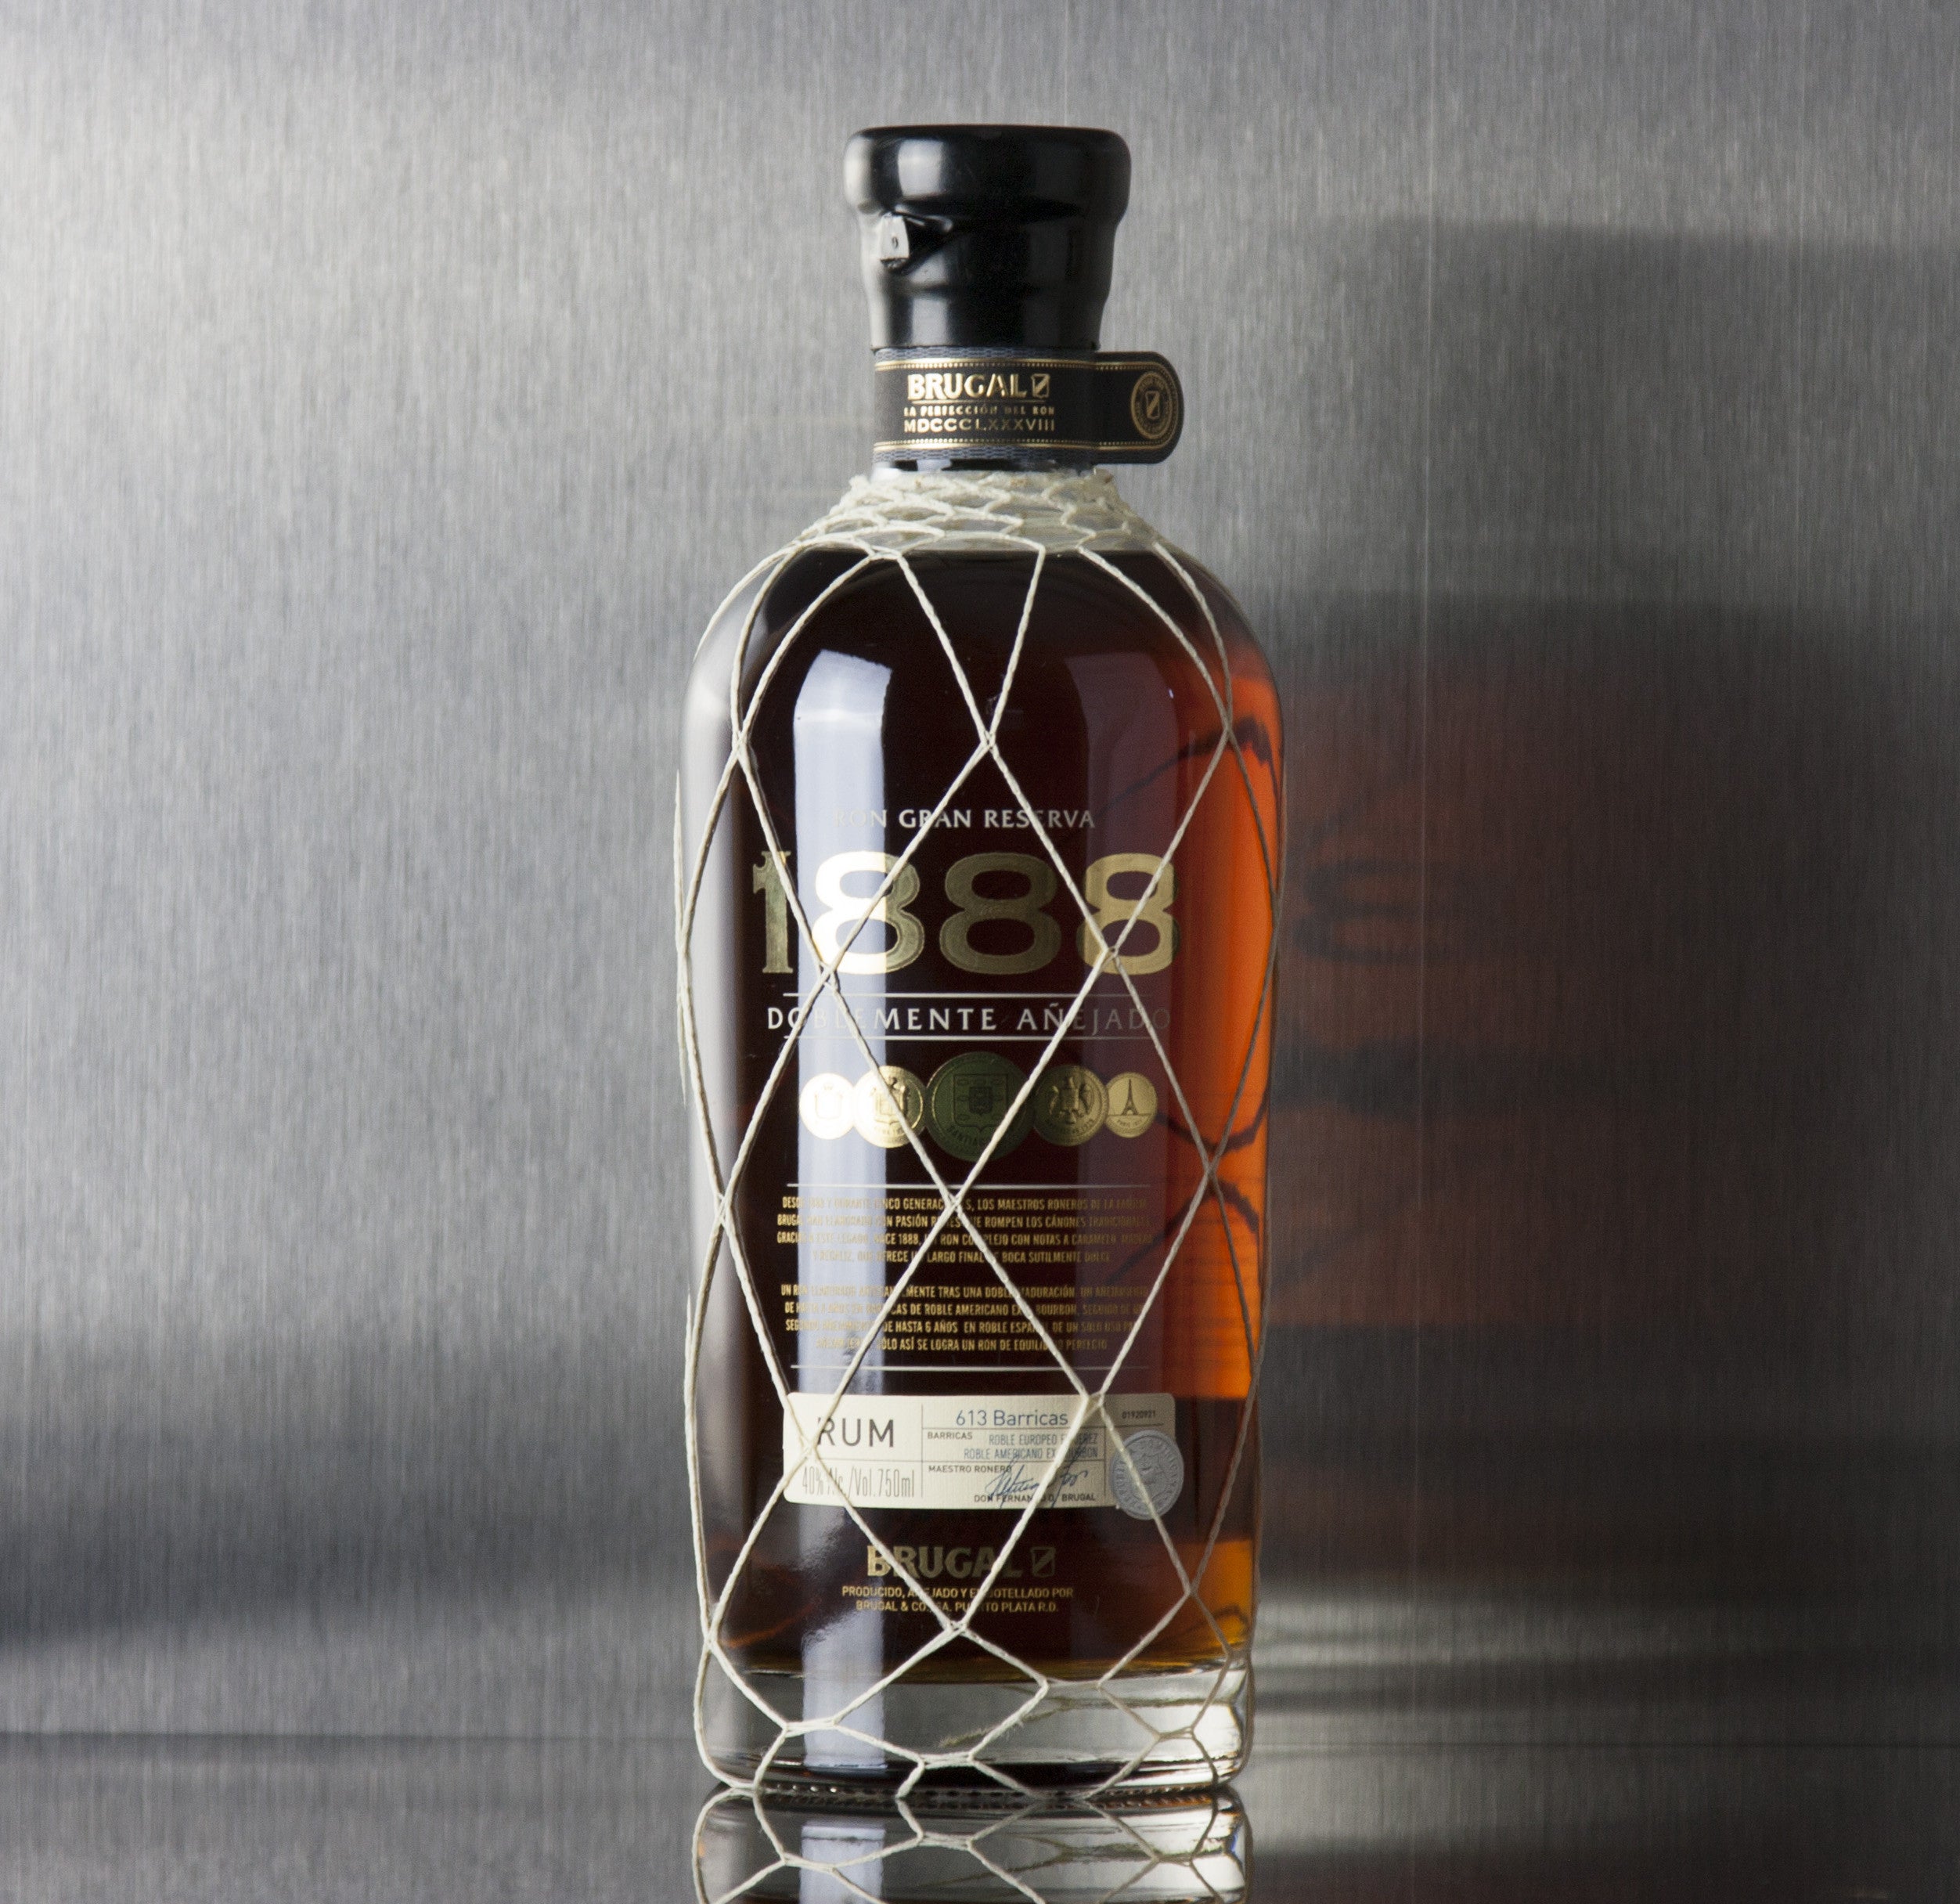 Brugal 1888 Rum 750 ml